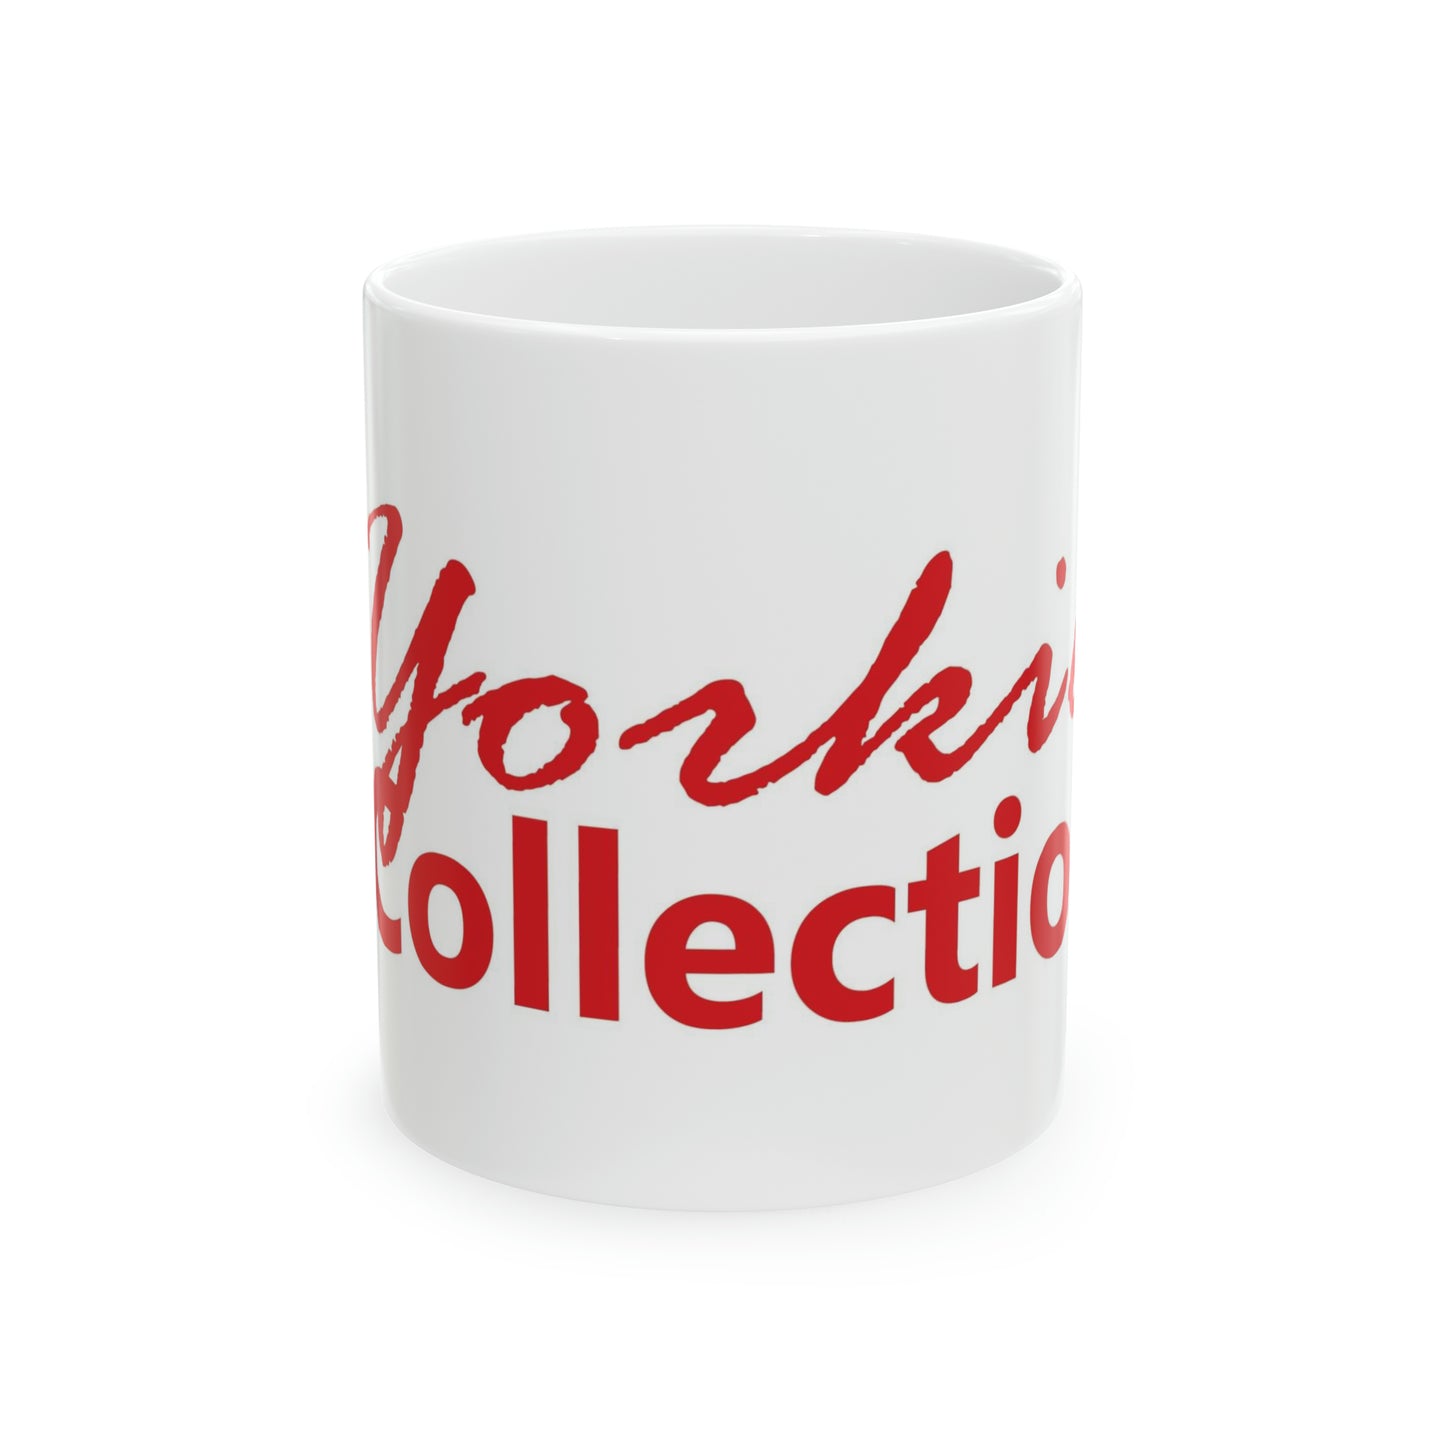 The Yorkie Collection - Ceramic Mug, 11oz